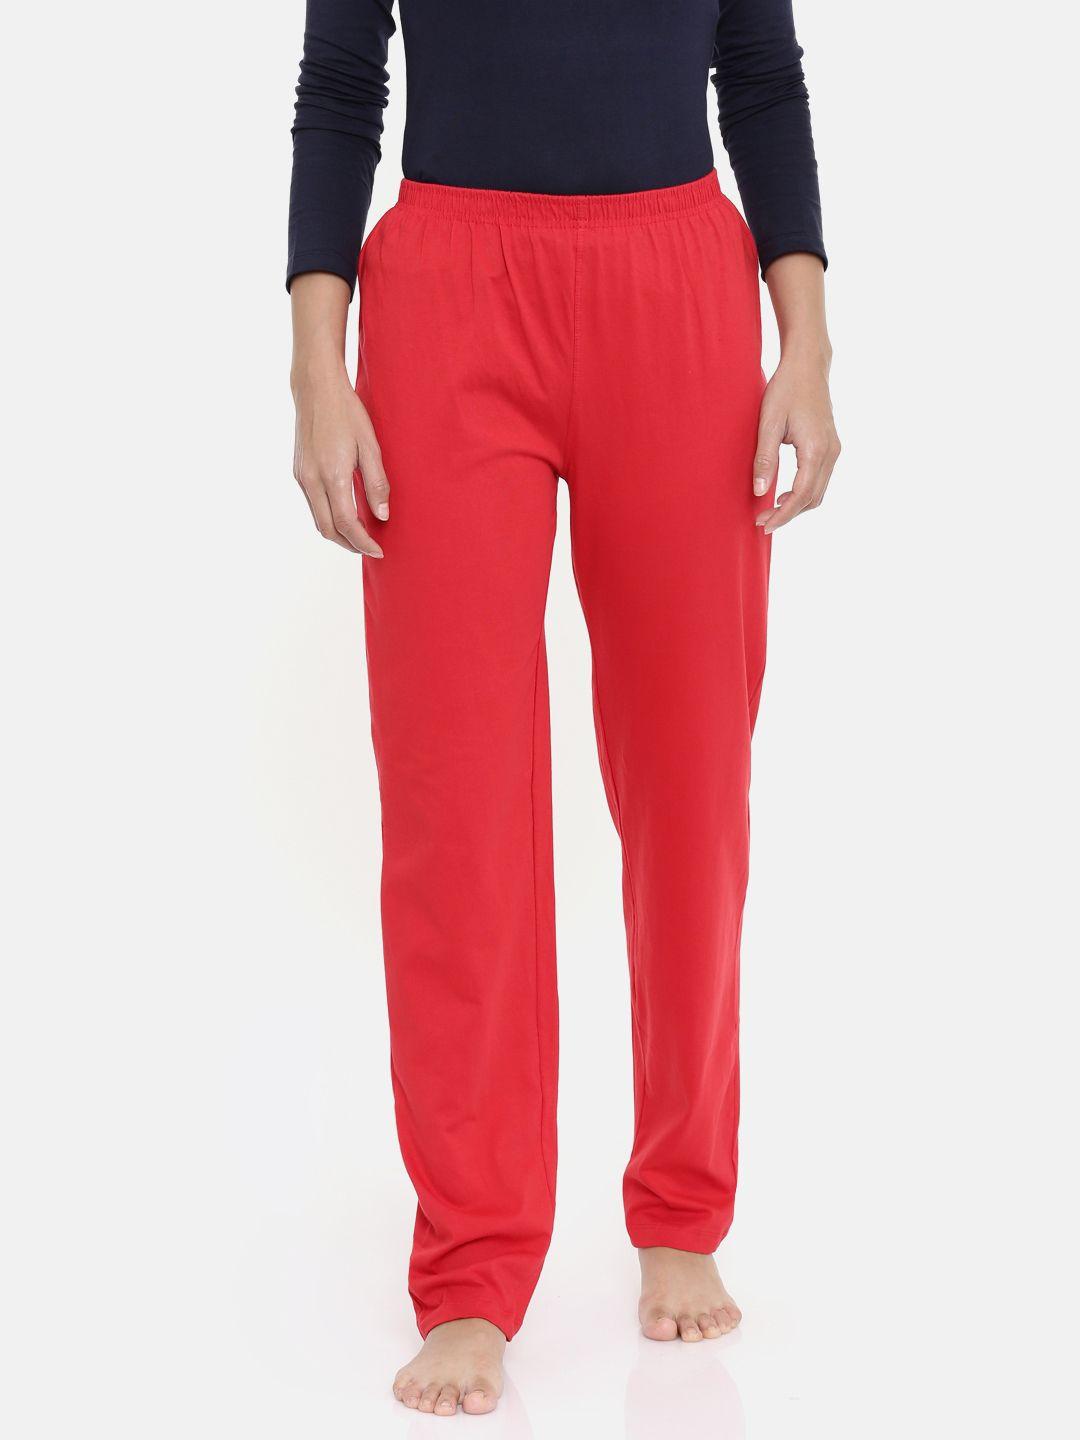 zebu-women-red-solid-lounge-pants-299_1zw_ppp_pln_red_xl